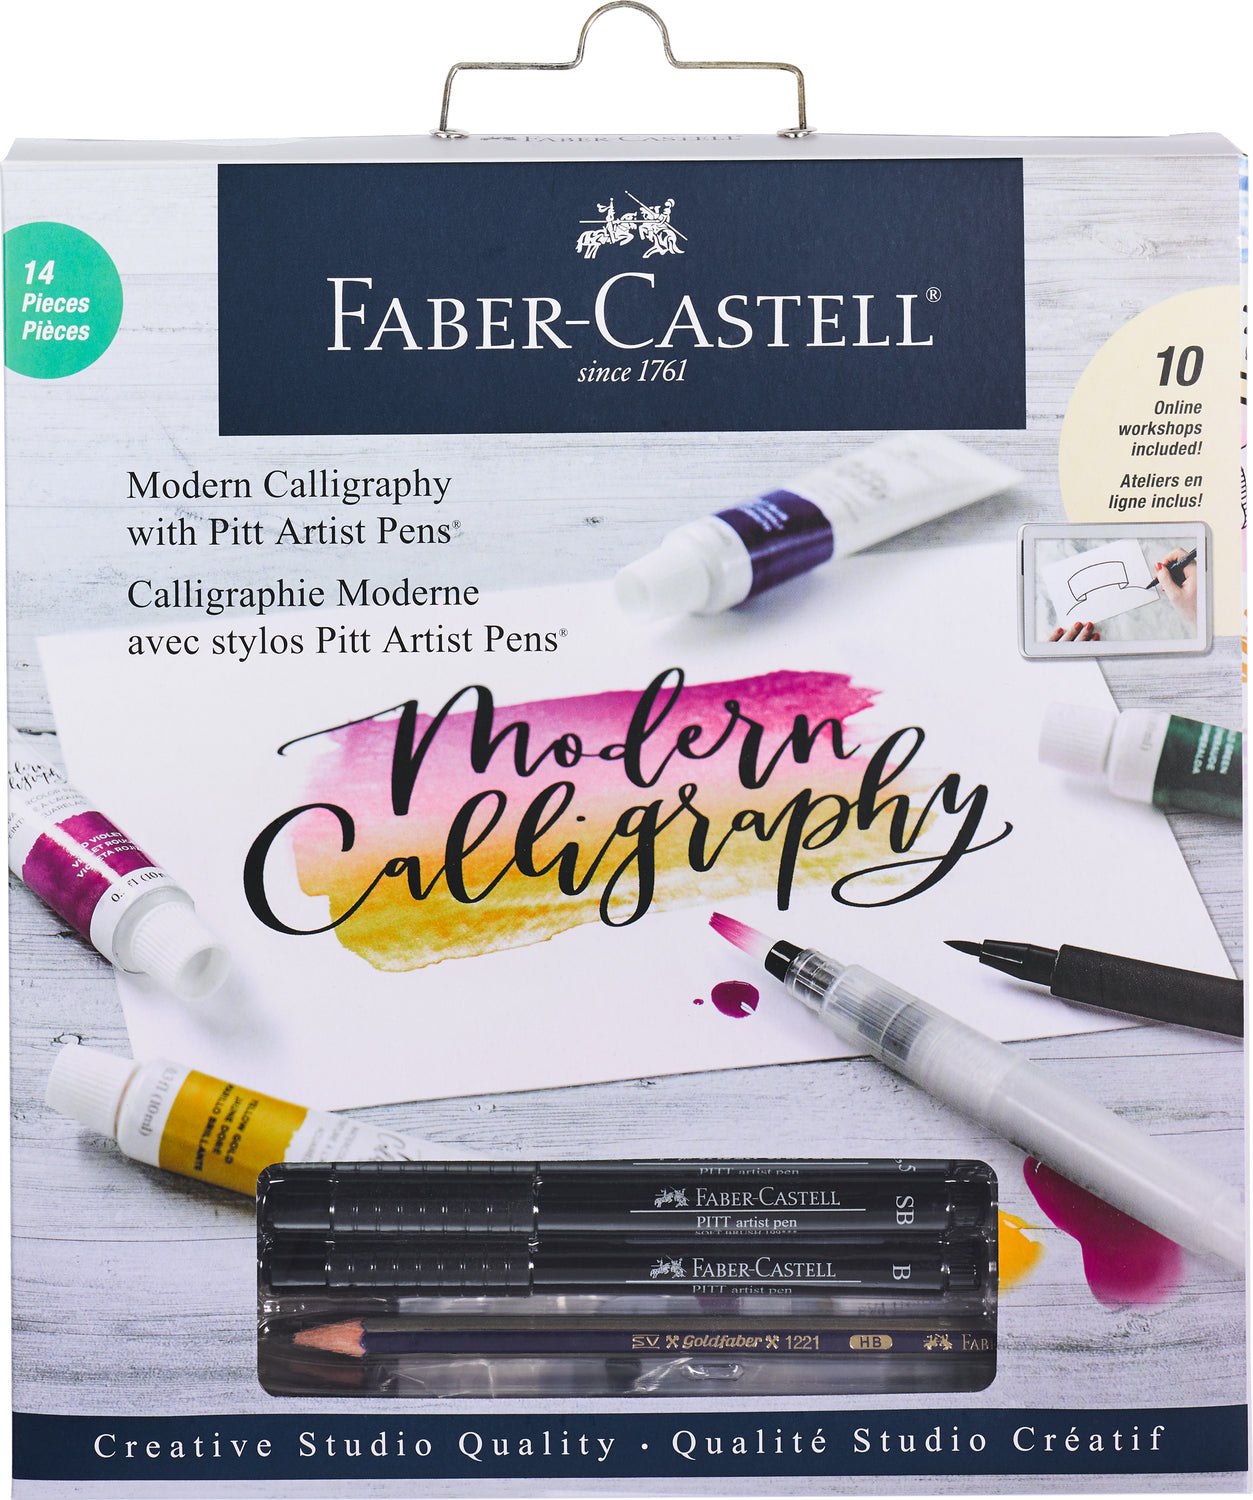 Modern Calligraphy Kit